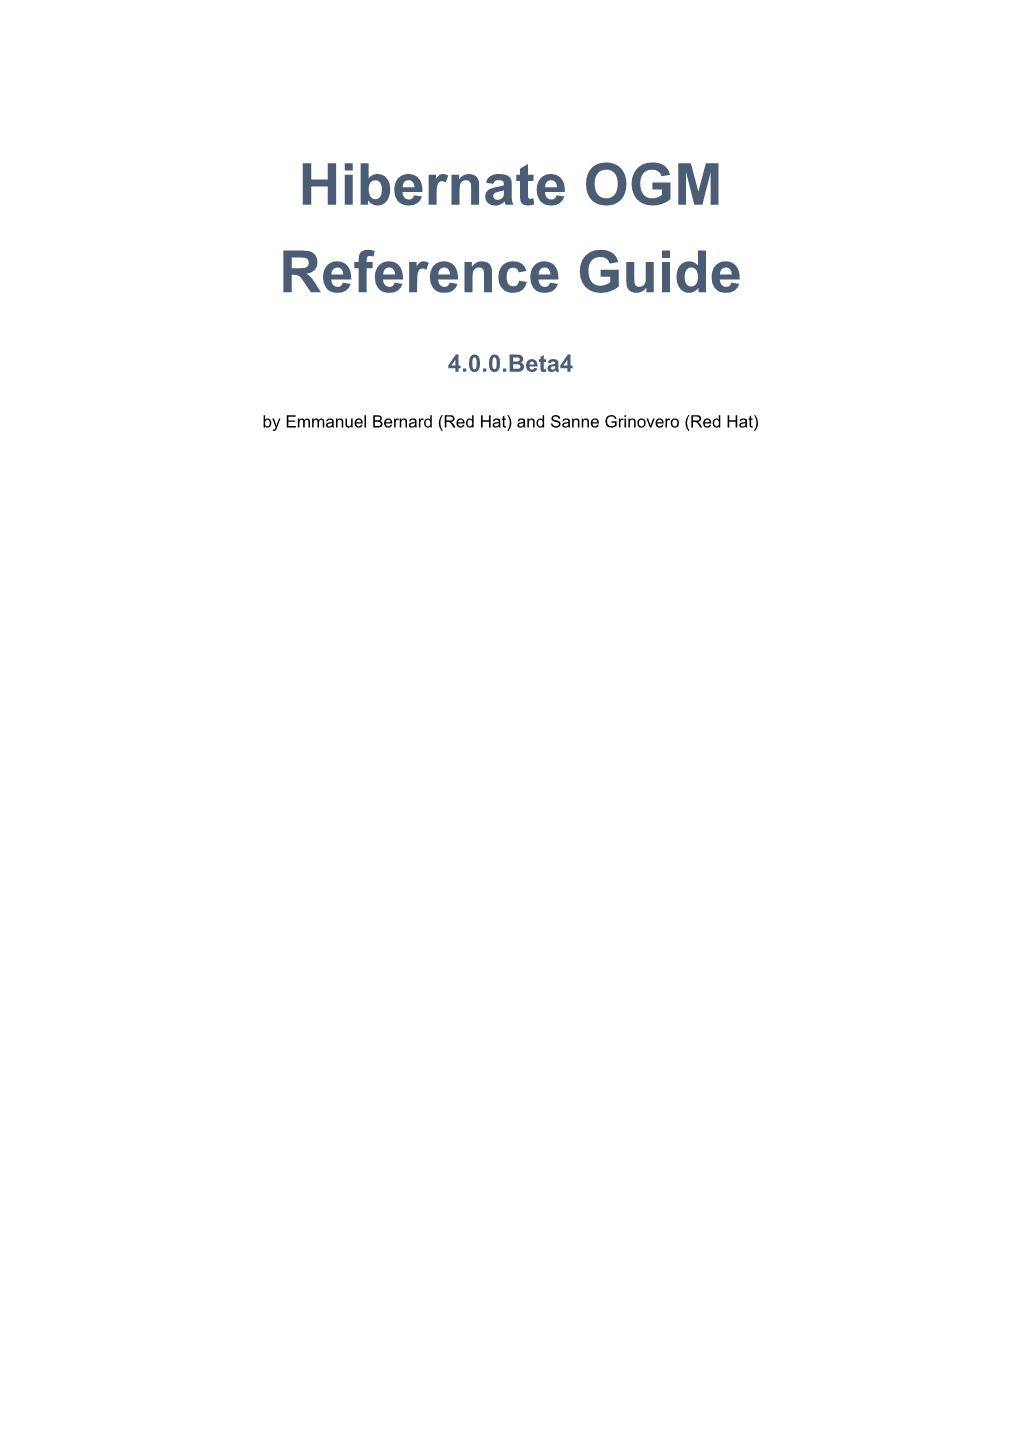 Hibernate OGM Reference Guide